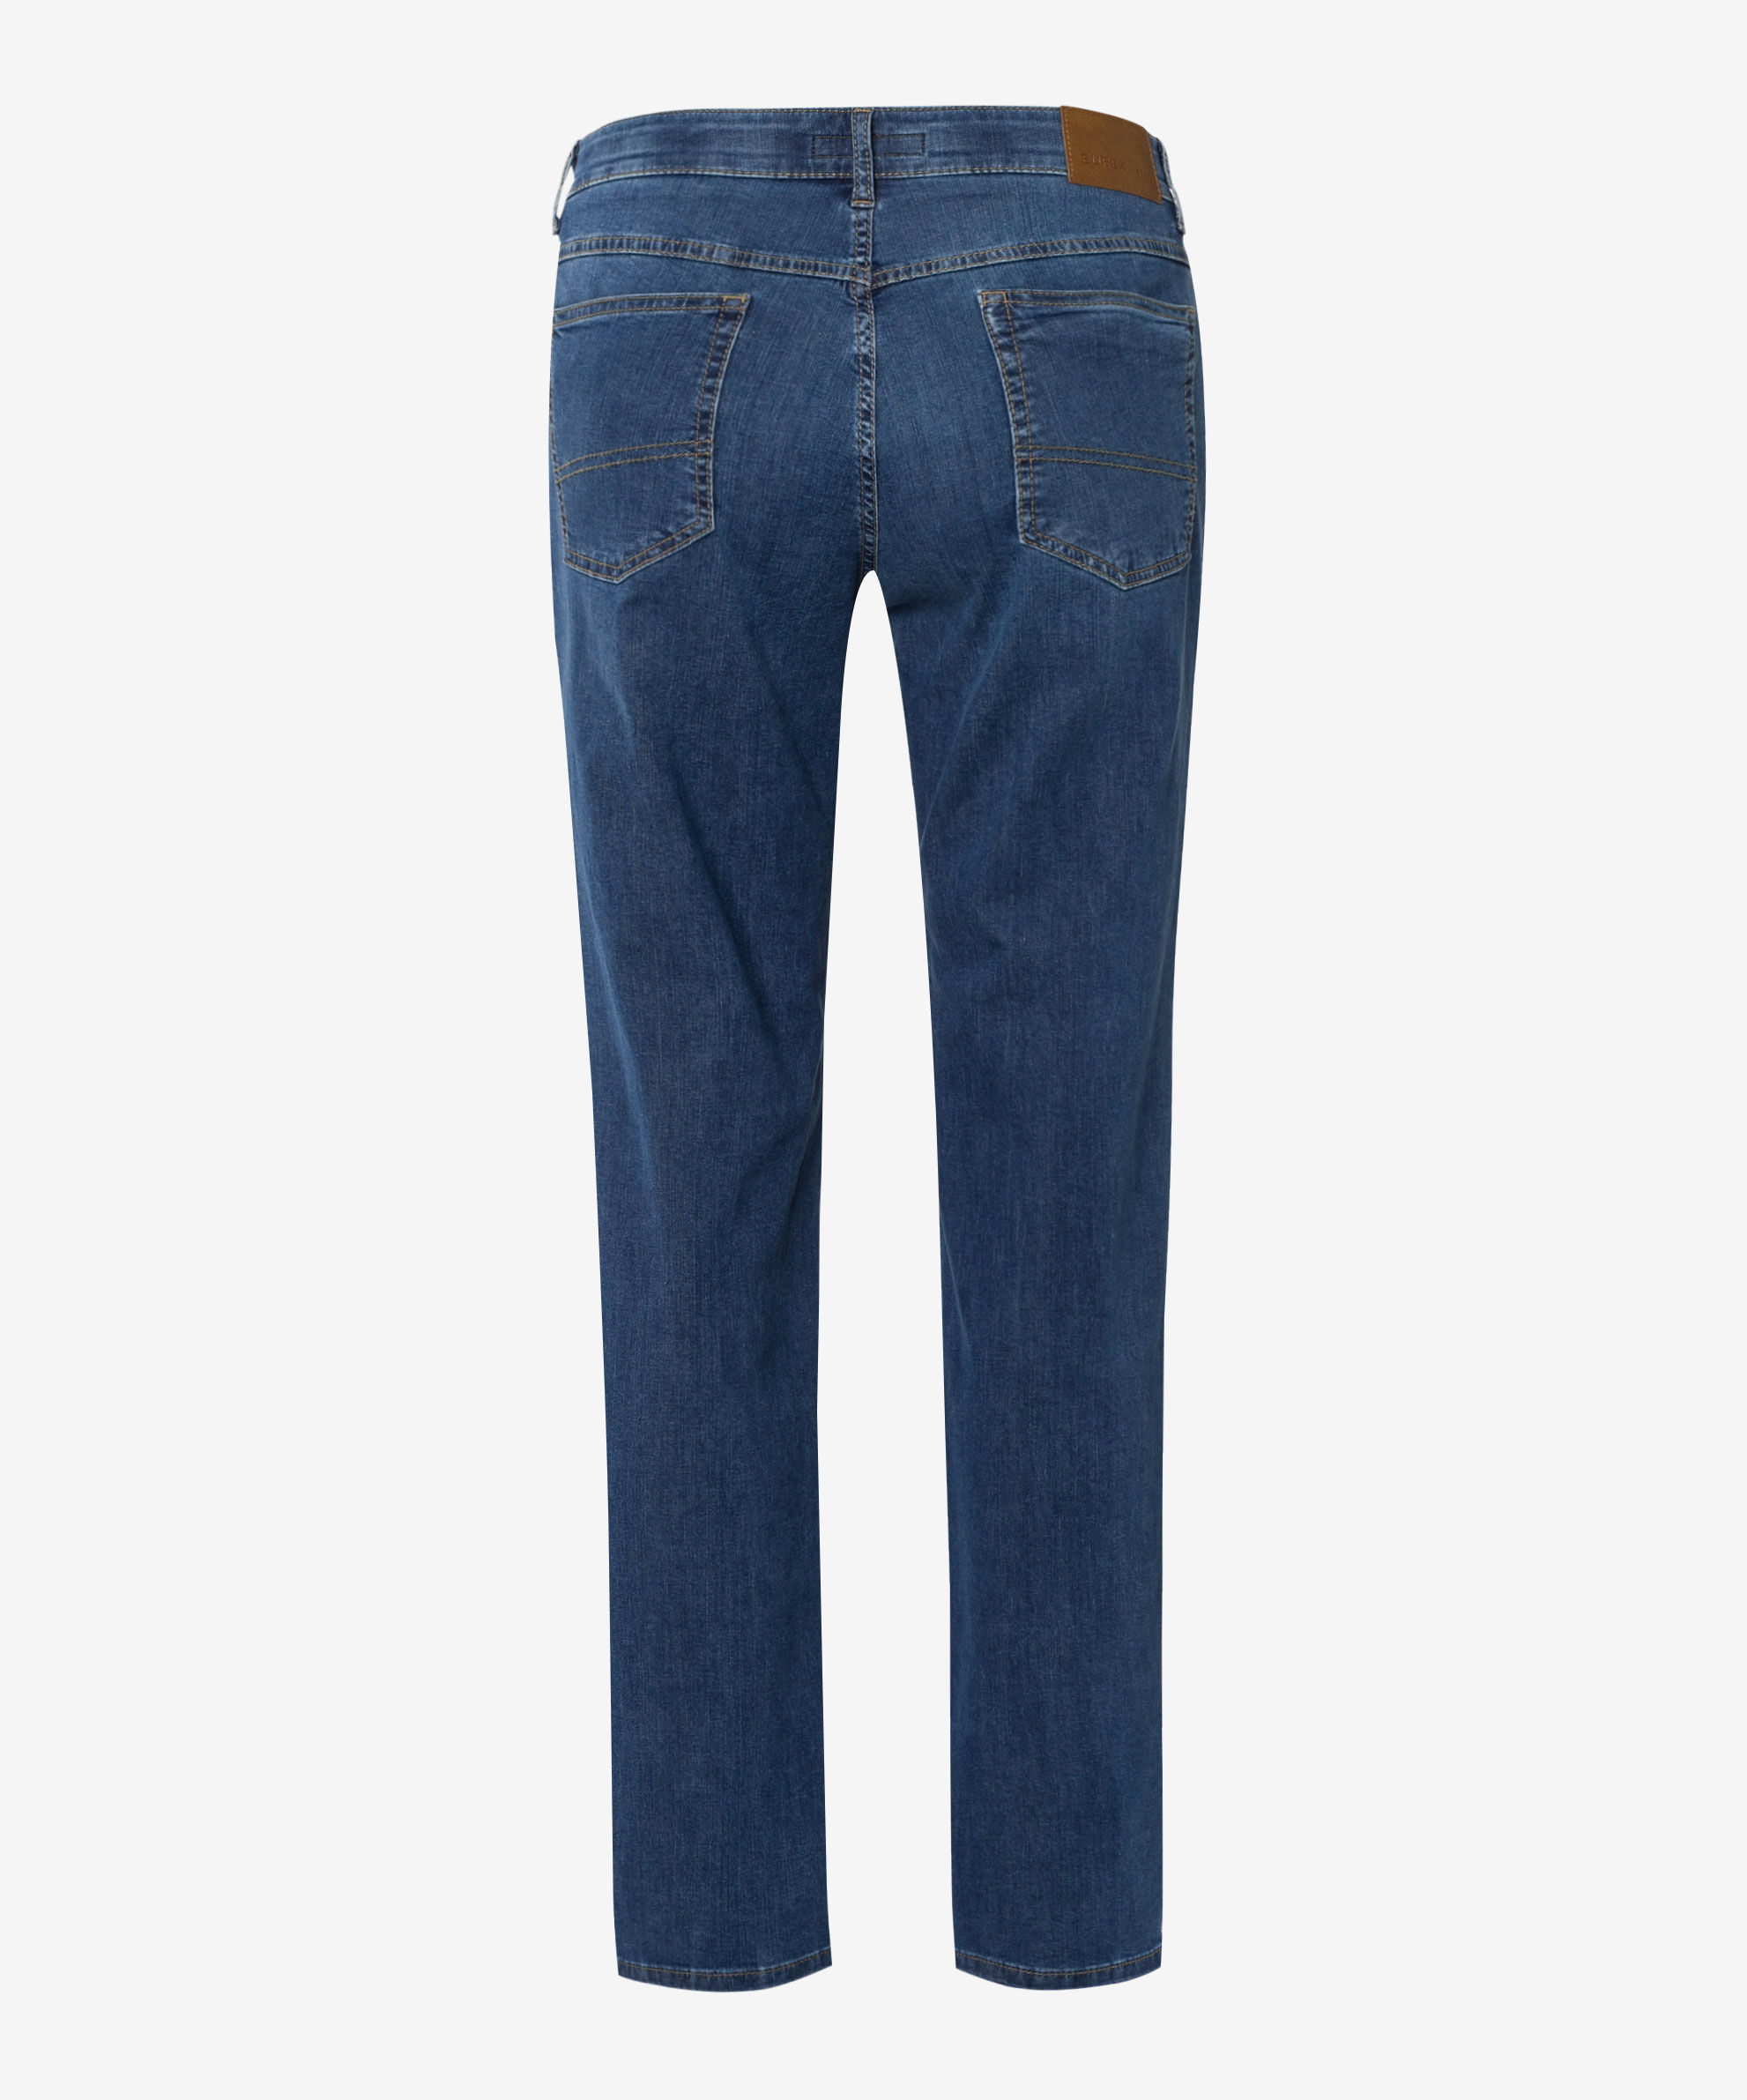 [Sehr beliebt, hohe Qualität] Brax Carlos Jan Jeans Pocket Men\'s Fashion Stone | Five Authentic Denim Rozing Blue